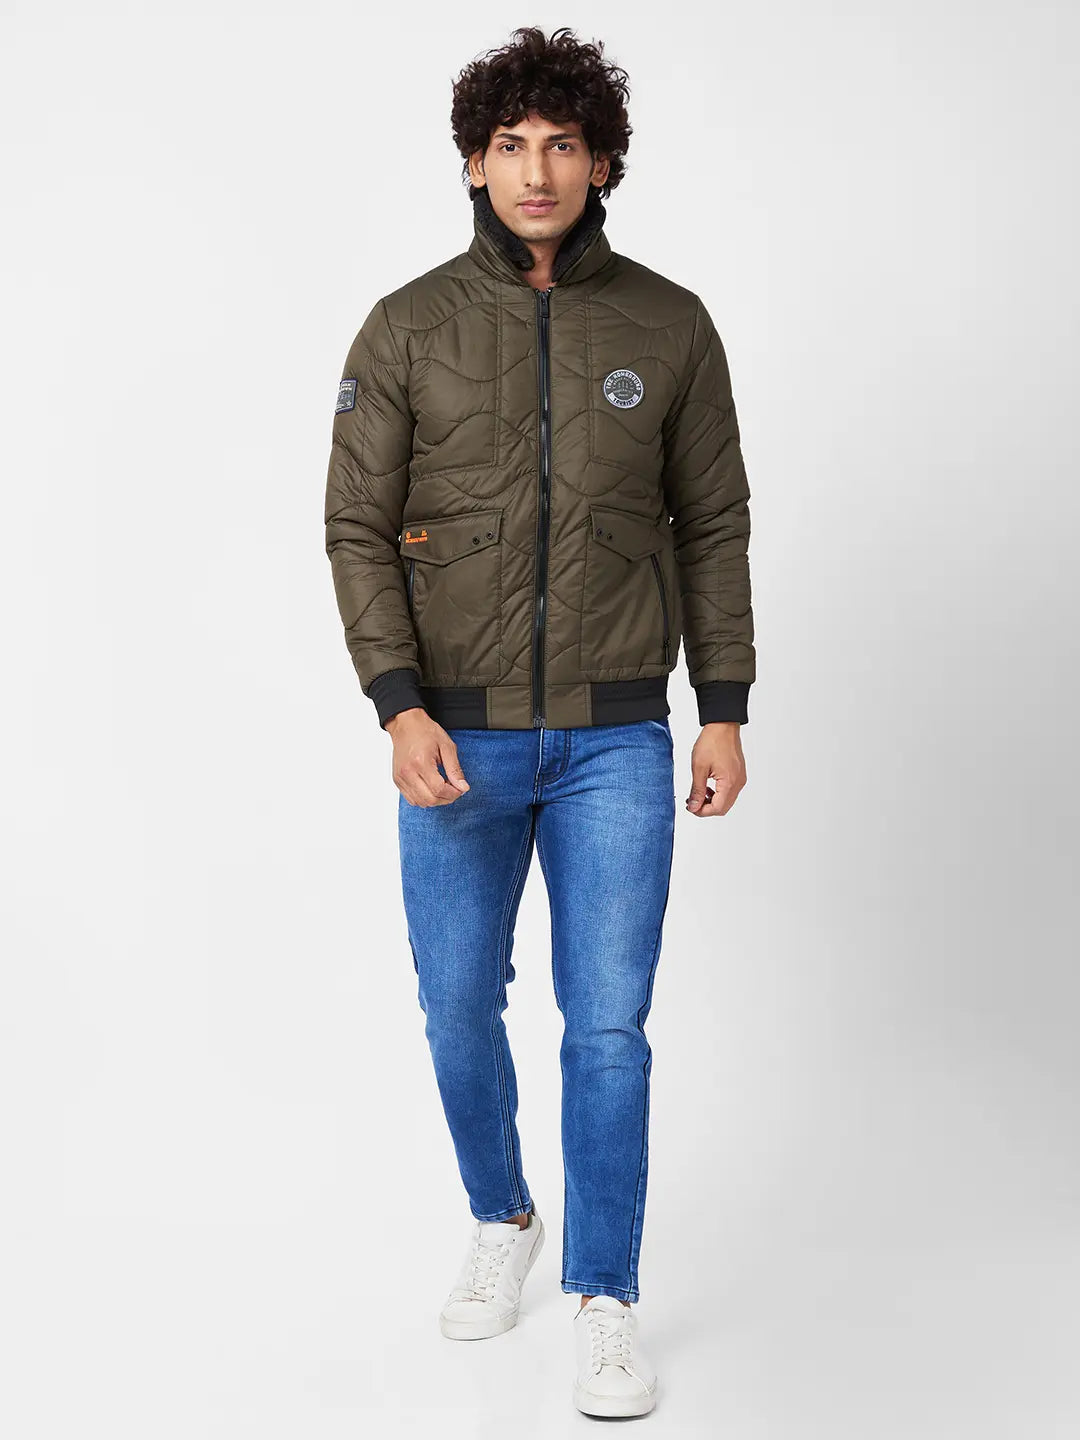 Superdry Brad Leather Jacket | ASOS